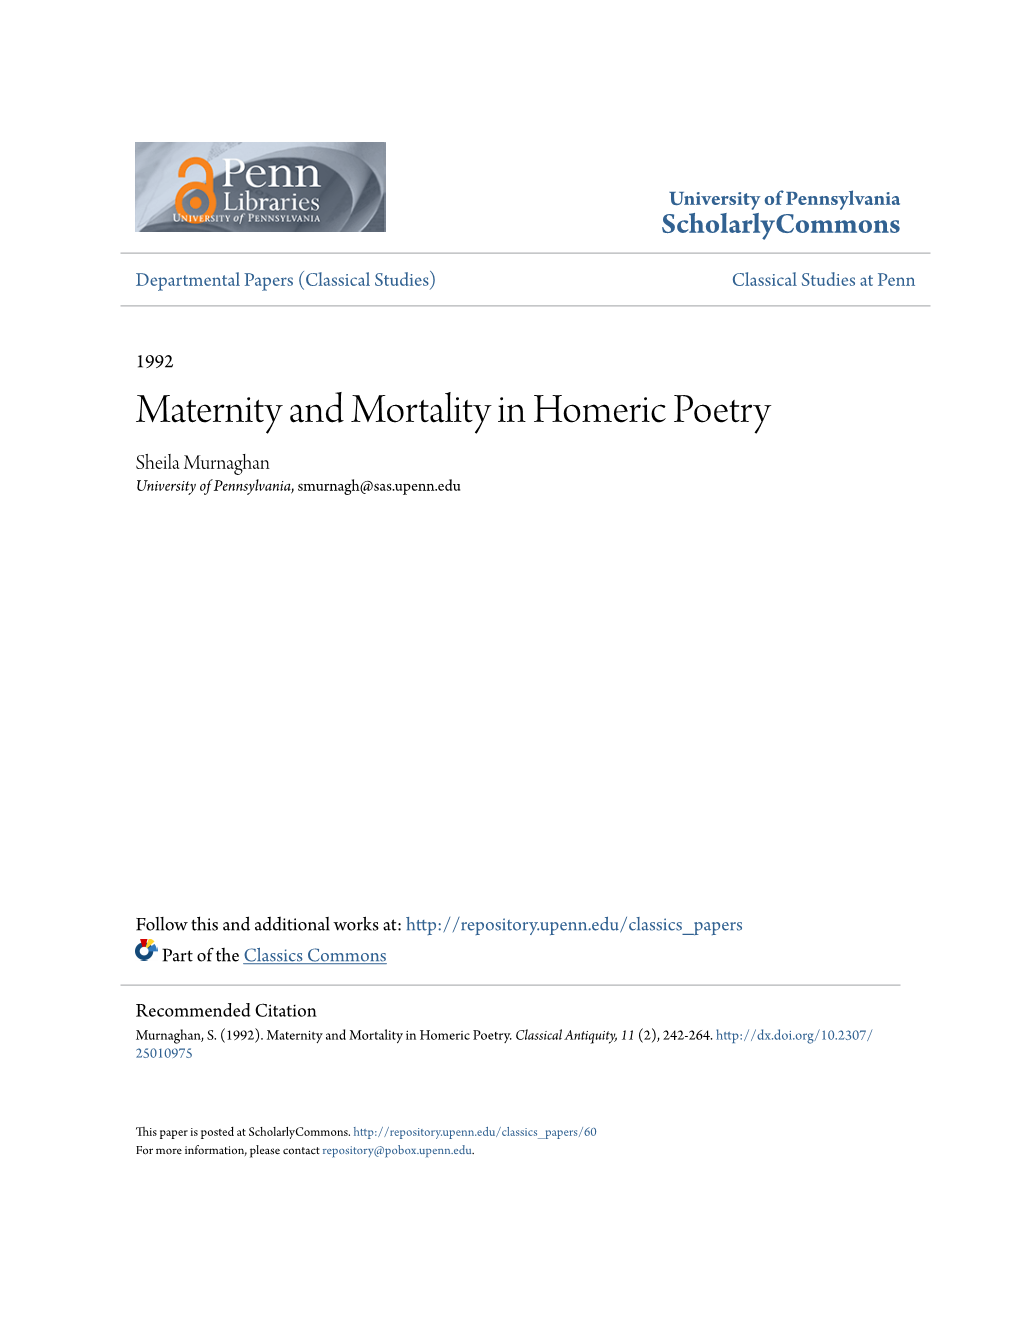 Maternity and Mortality in Homeric Poetry Sheila Murnaghan University of Pennsylvania, Smurnagh@Sas.Upenn.Edu